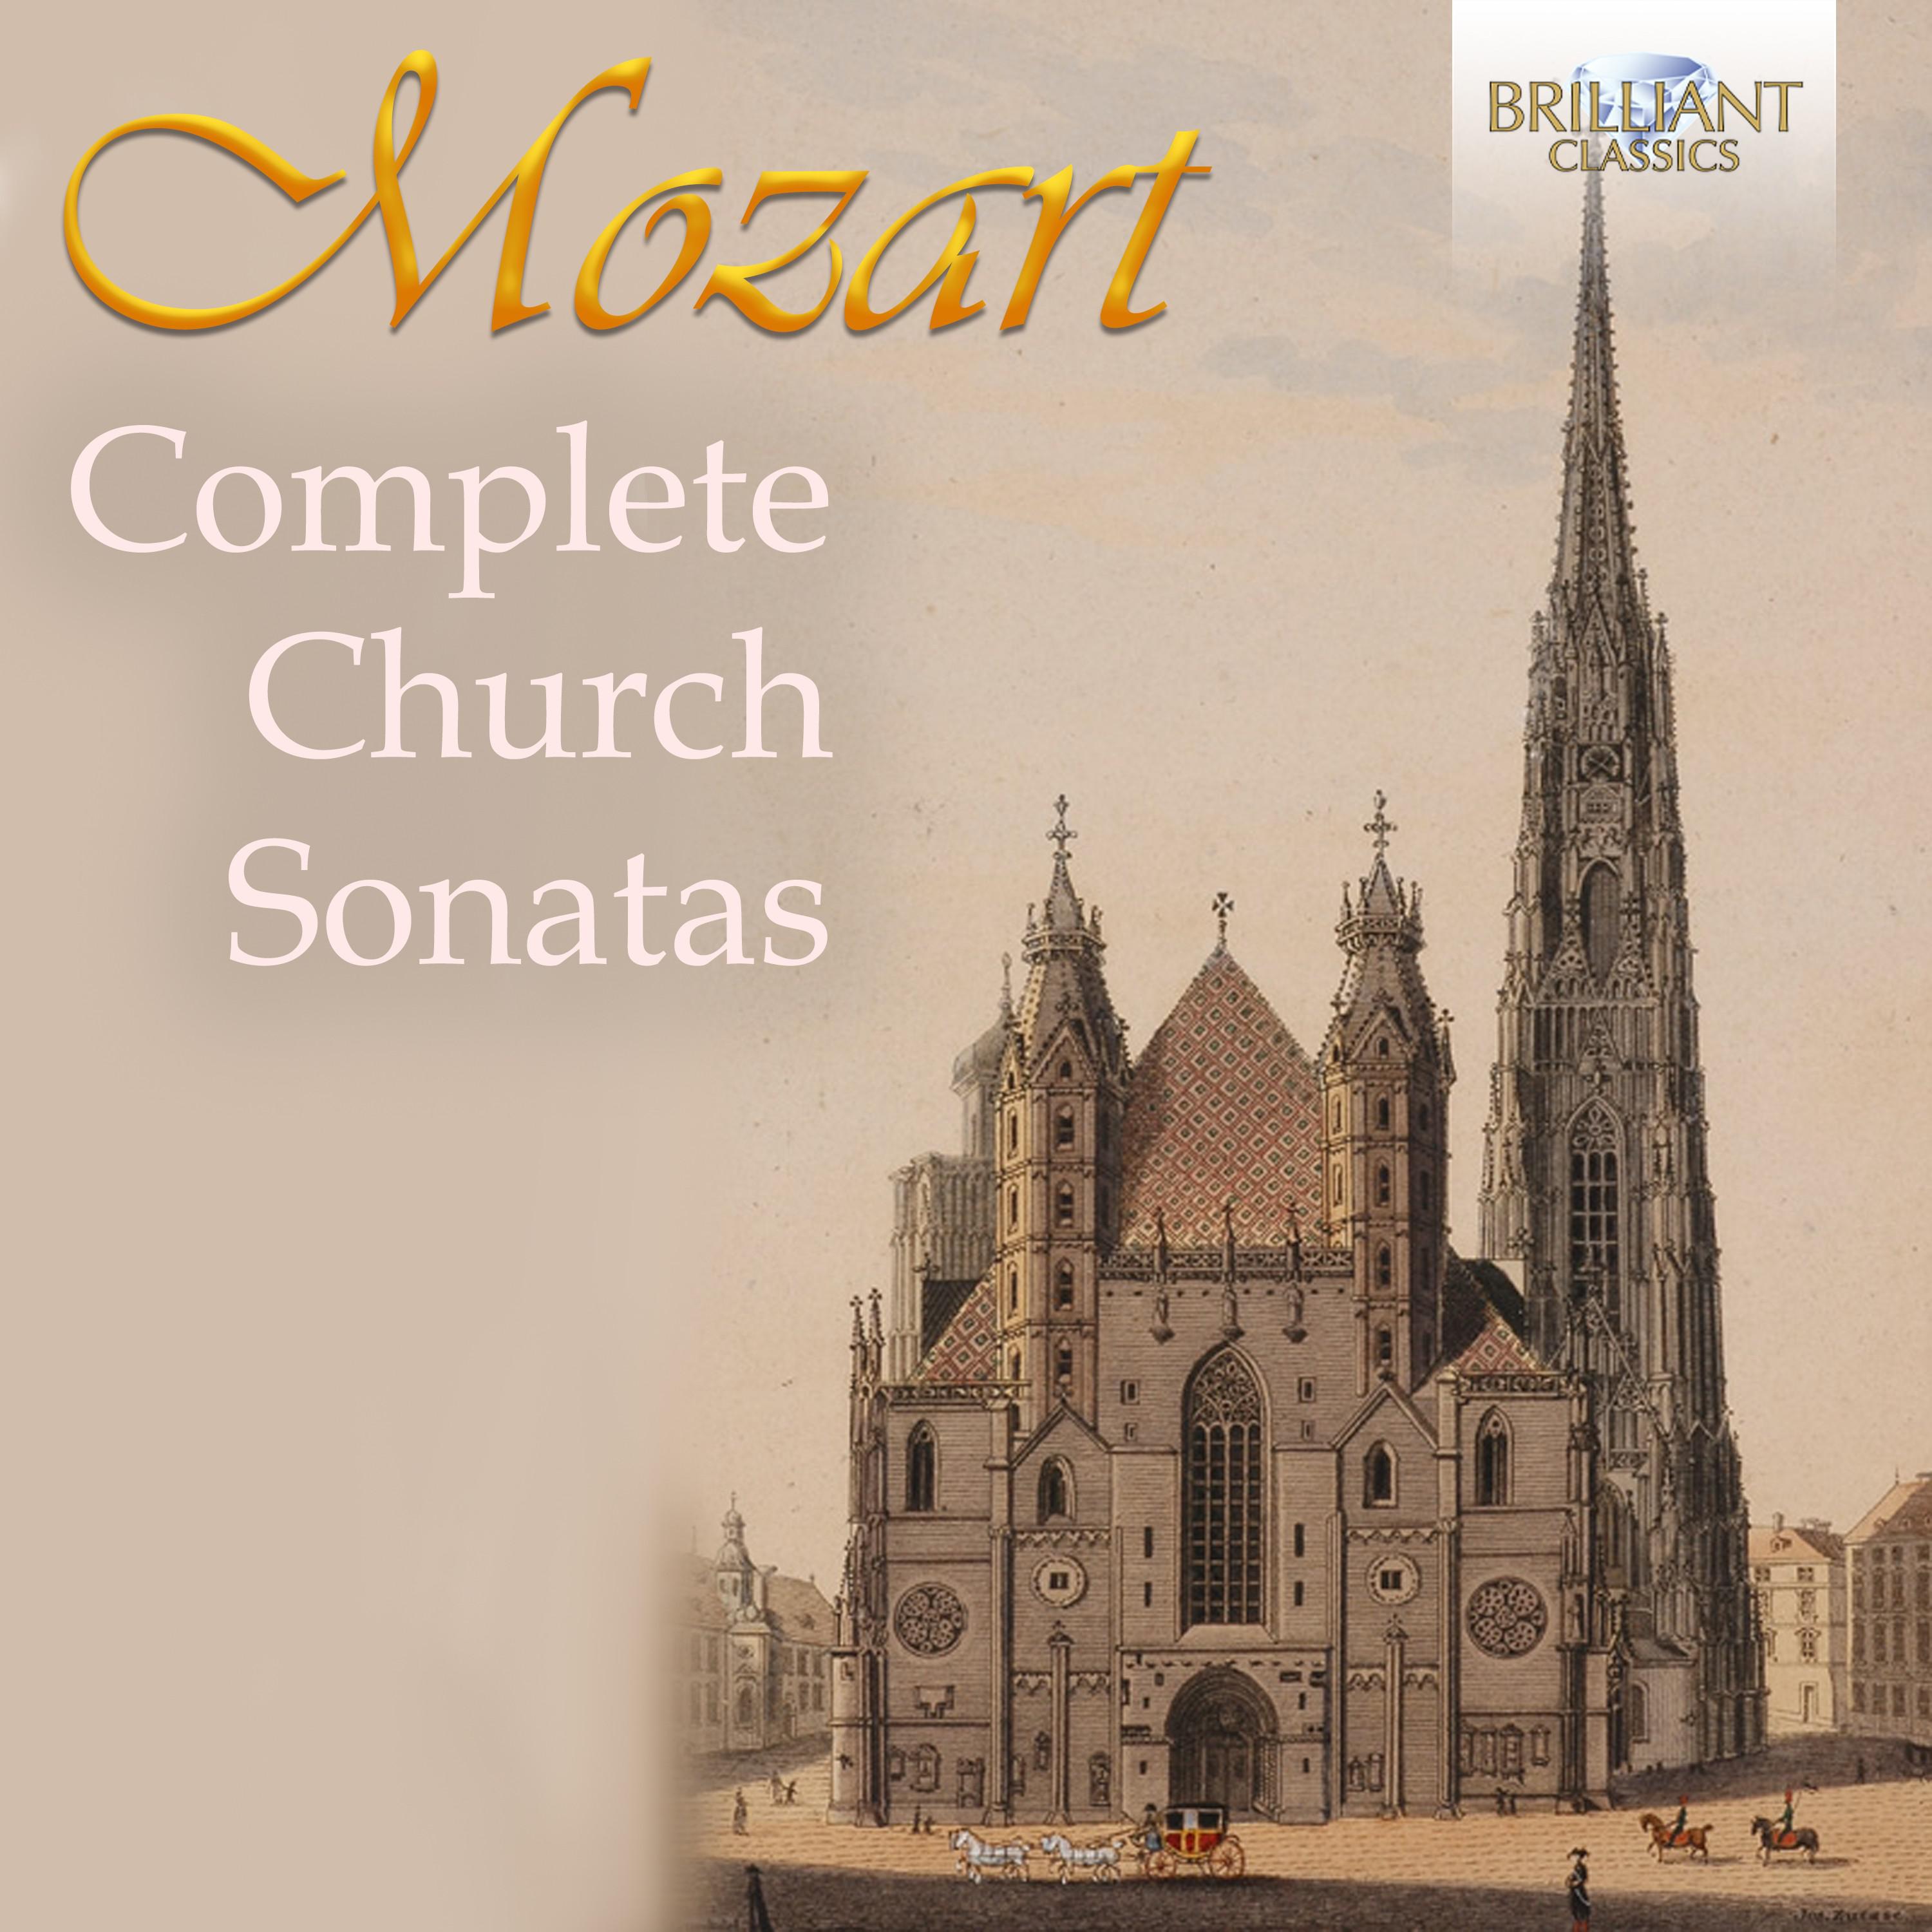 Bohuslav Matoušek - Church Sonata in B-Flat Major, K. 212